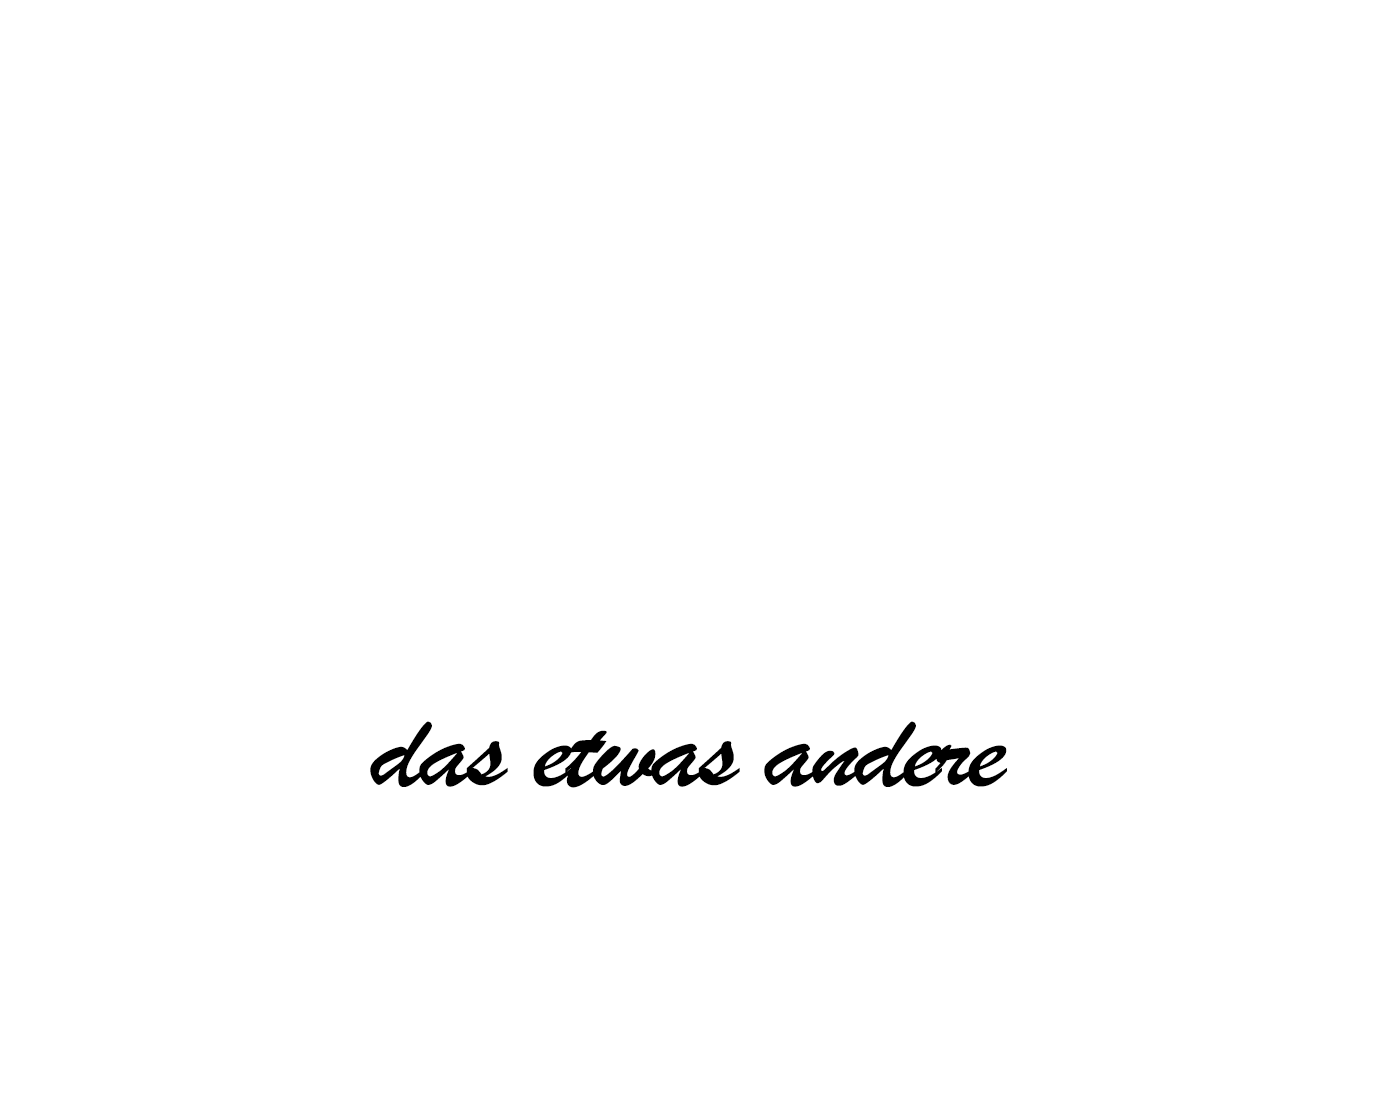 Marc's Barmusic